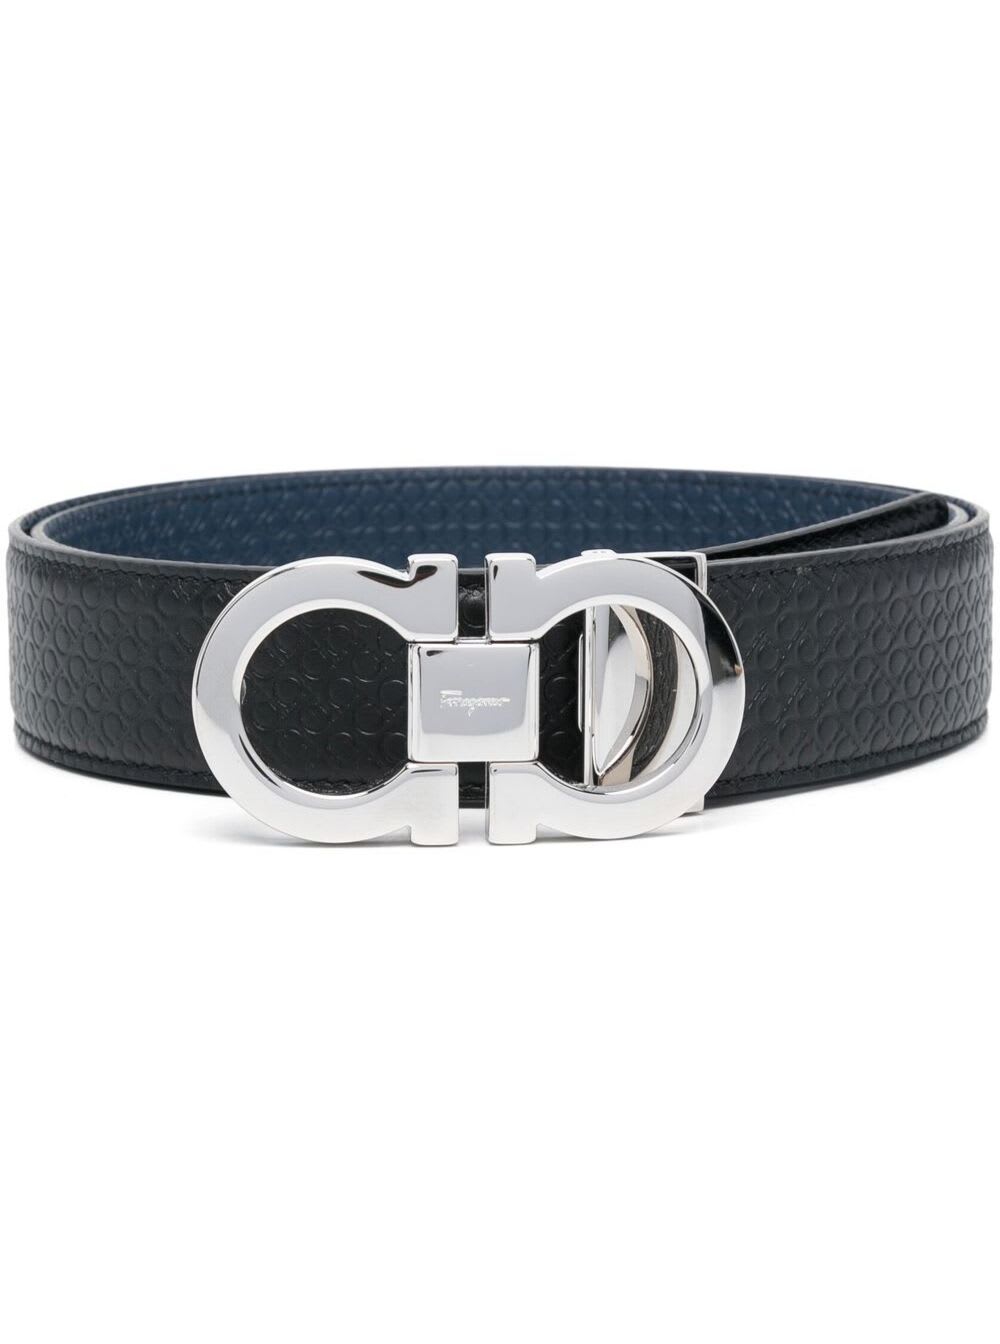 Salvatore Ferragamo Black And Blue Leather Reversible Belt Man